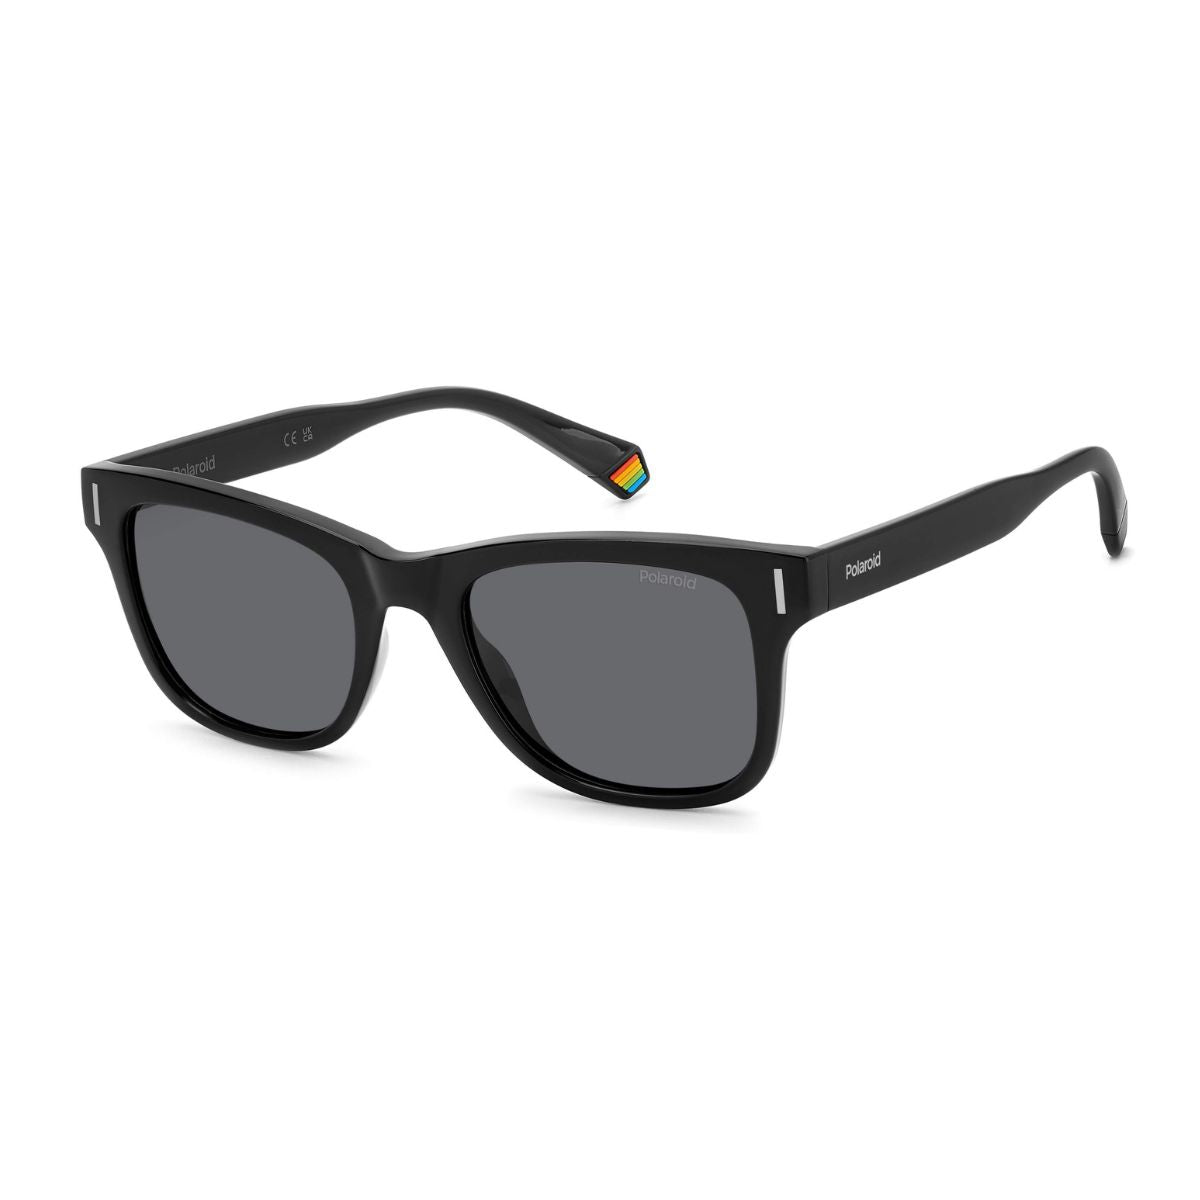 "Buy Polaroid 6206/S 807M9 Stylish Polarized Sunglasses For Men and Women At Optorium""